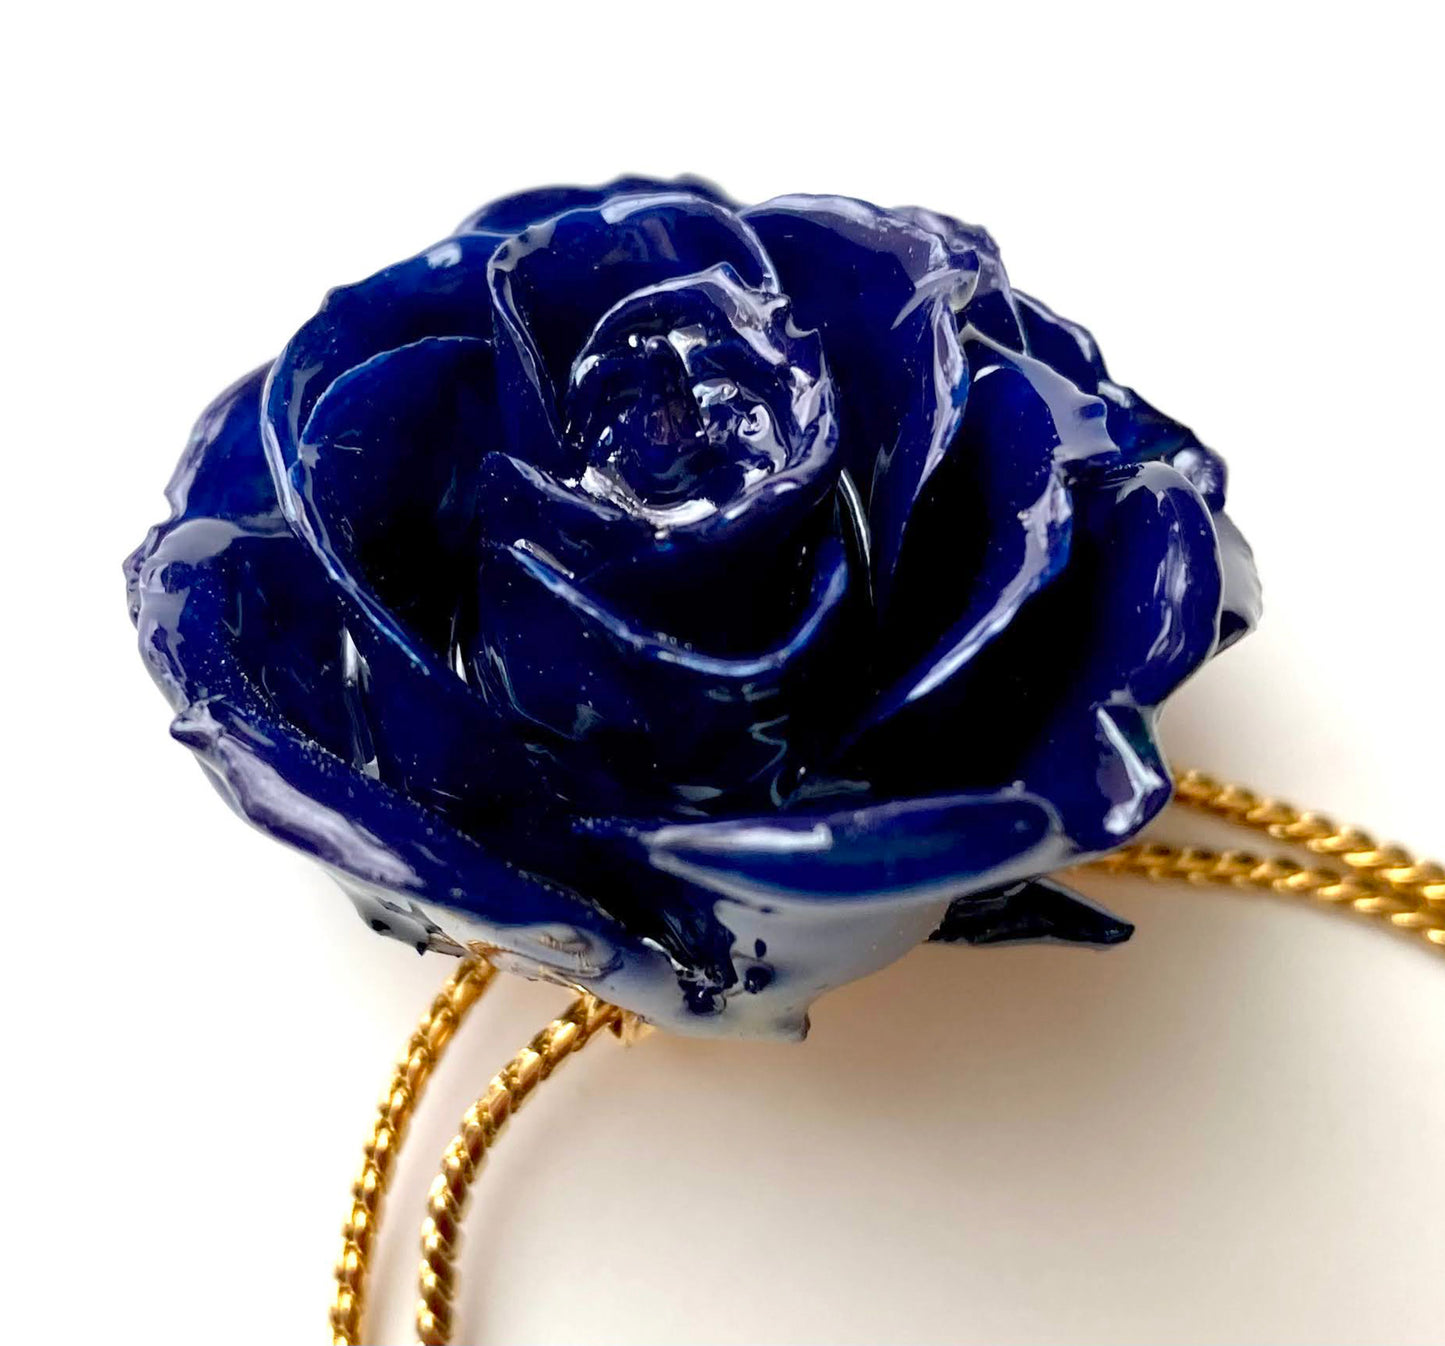 Mini Rose Mini 1.5-2.25 inch Pendant Necklace 18 inch Gold Plated 24K (Indigo Blue)